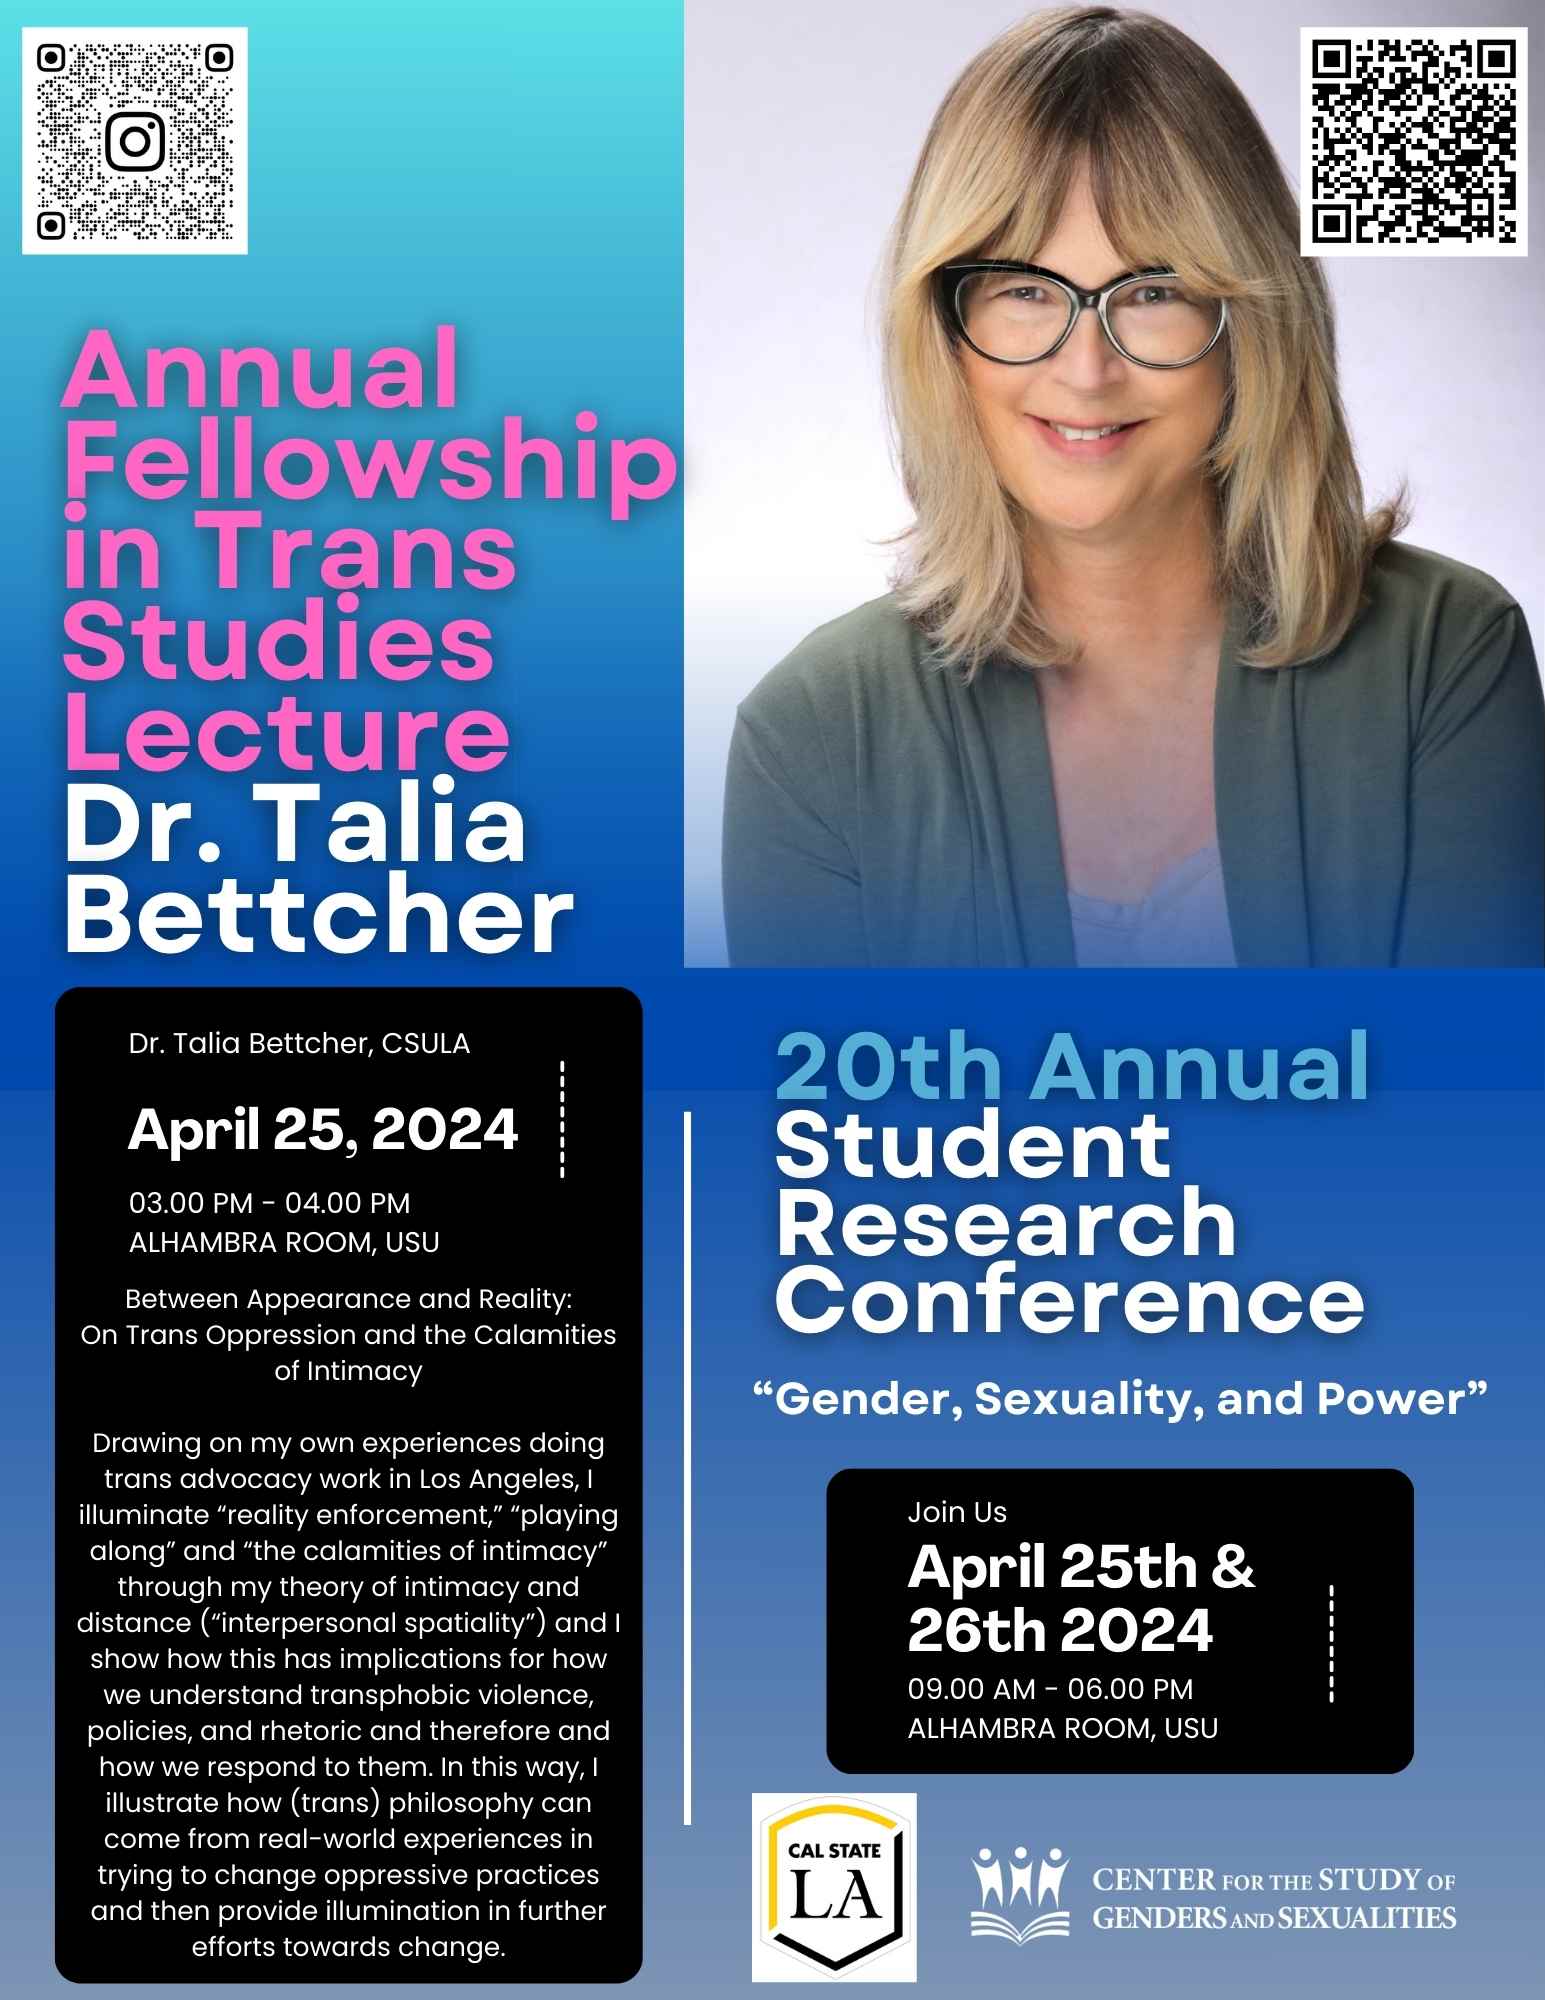 CSGS Conference Keynote Speaker - Dr. Talia Bettcher